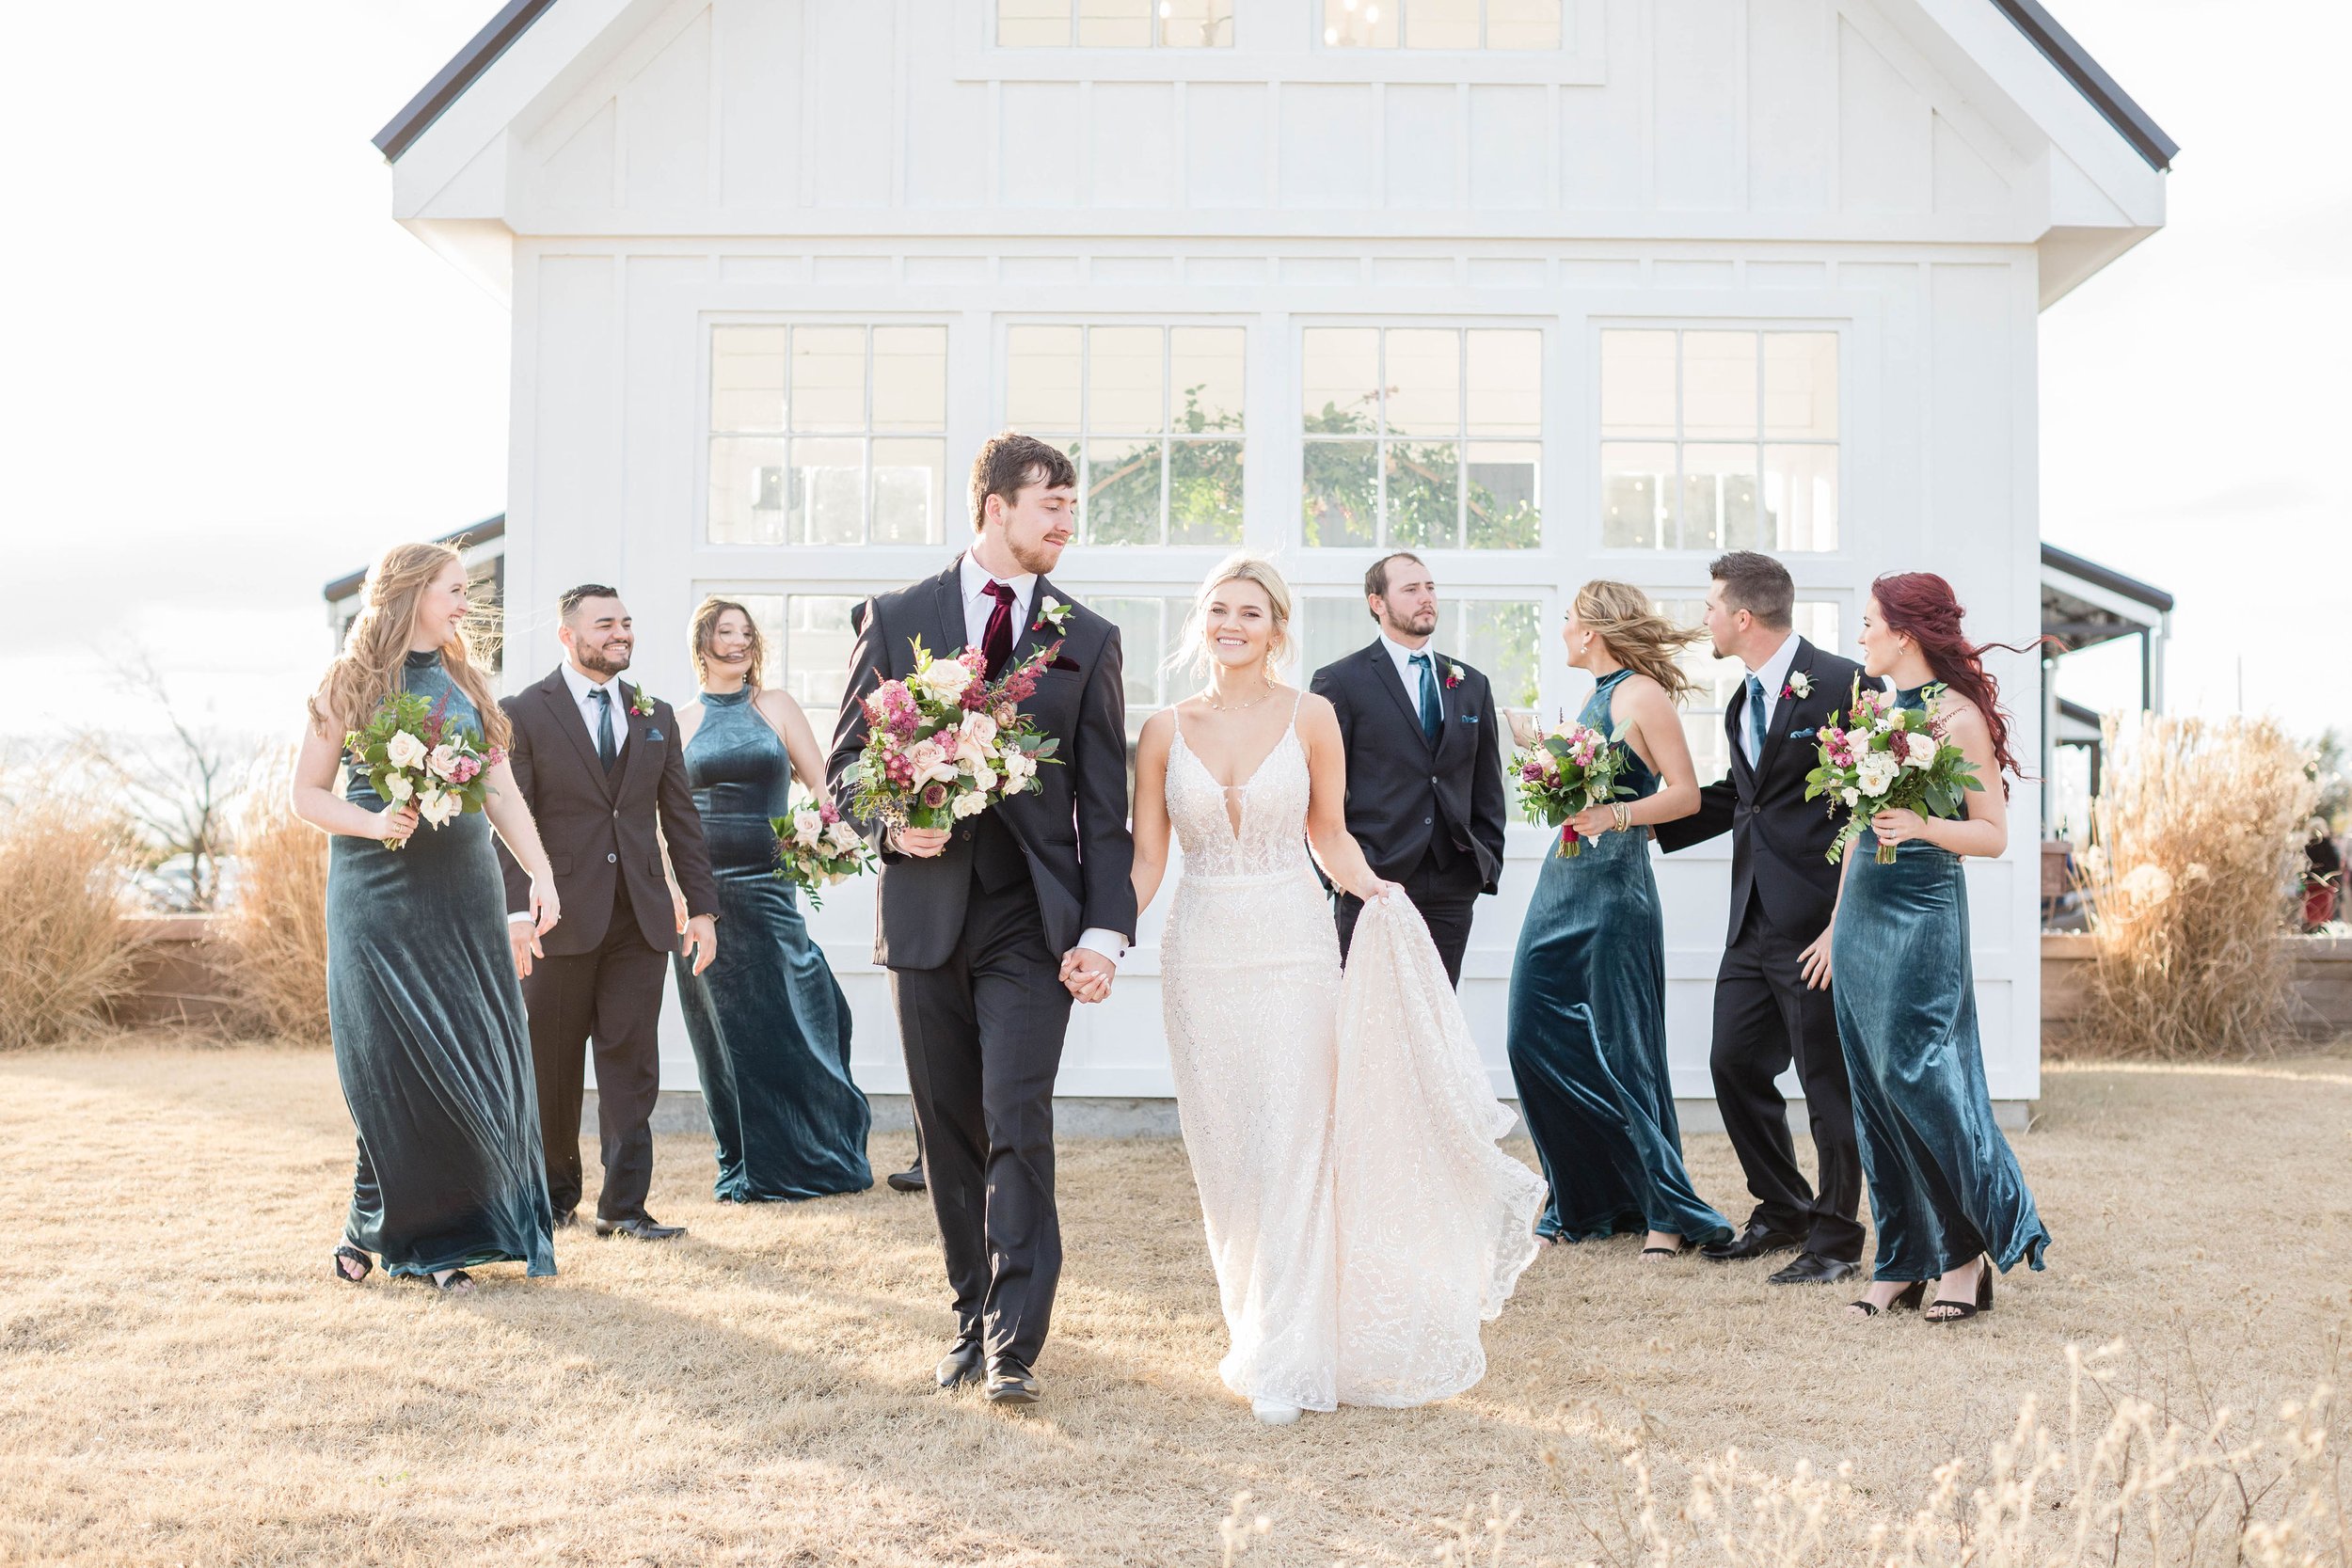 Waldrop-wedding-bushel-peck-photo-davis-grey-farms-454.jpg